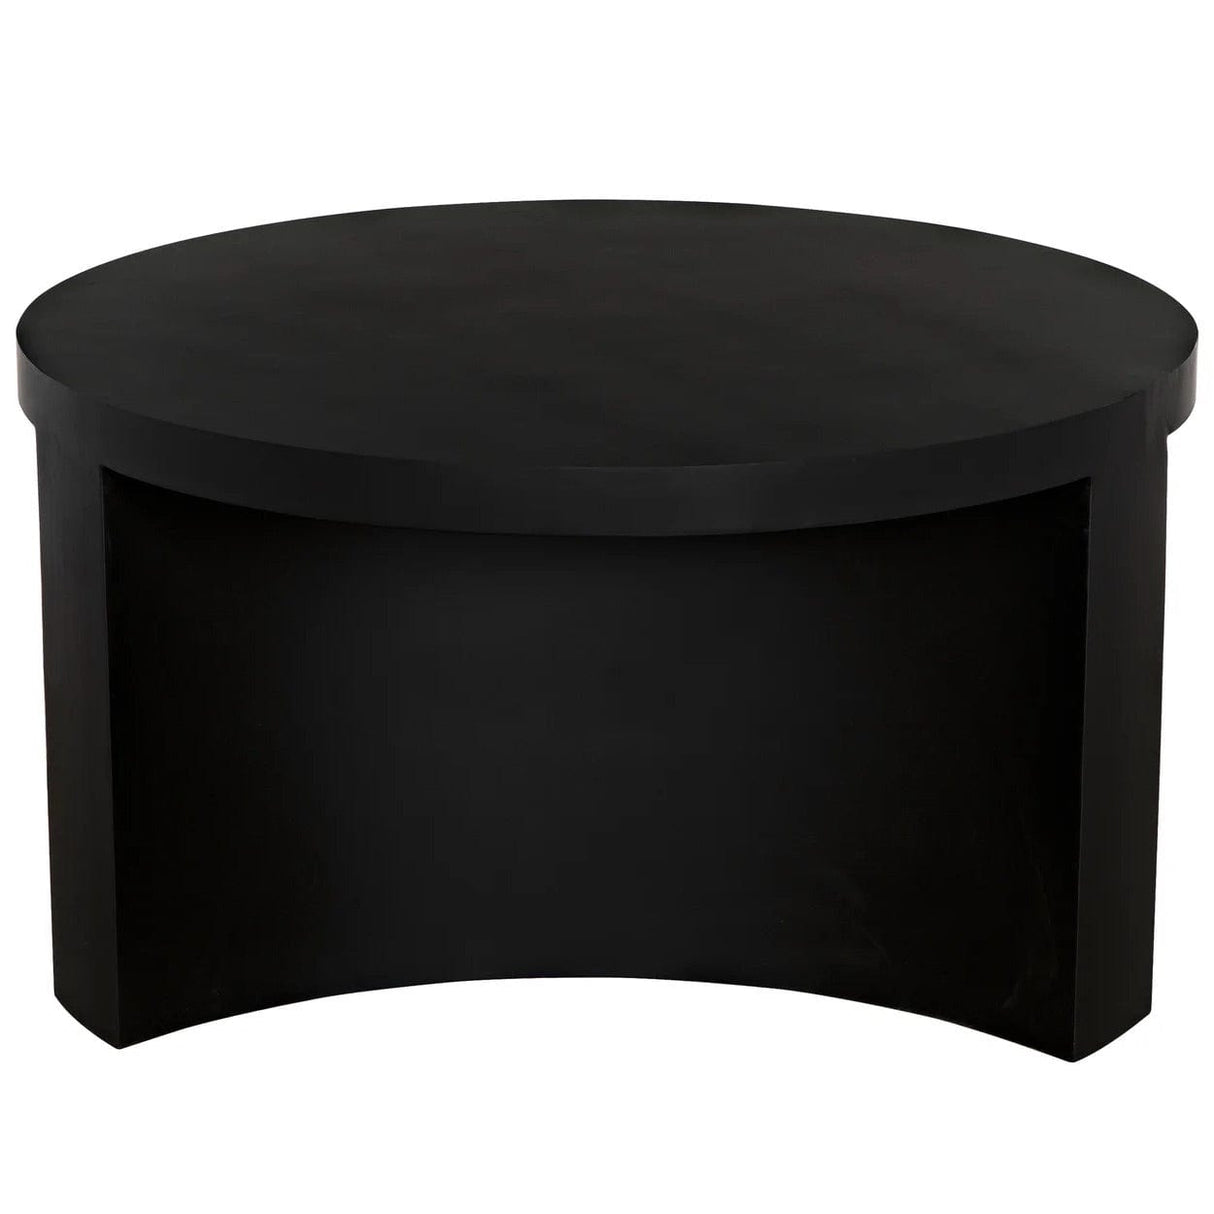 Noir Steward Coffee Table Furniture